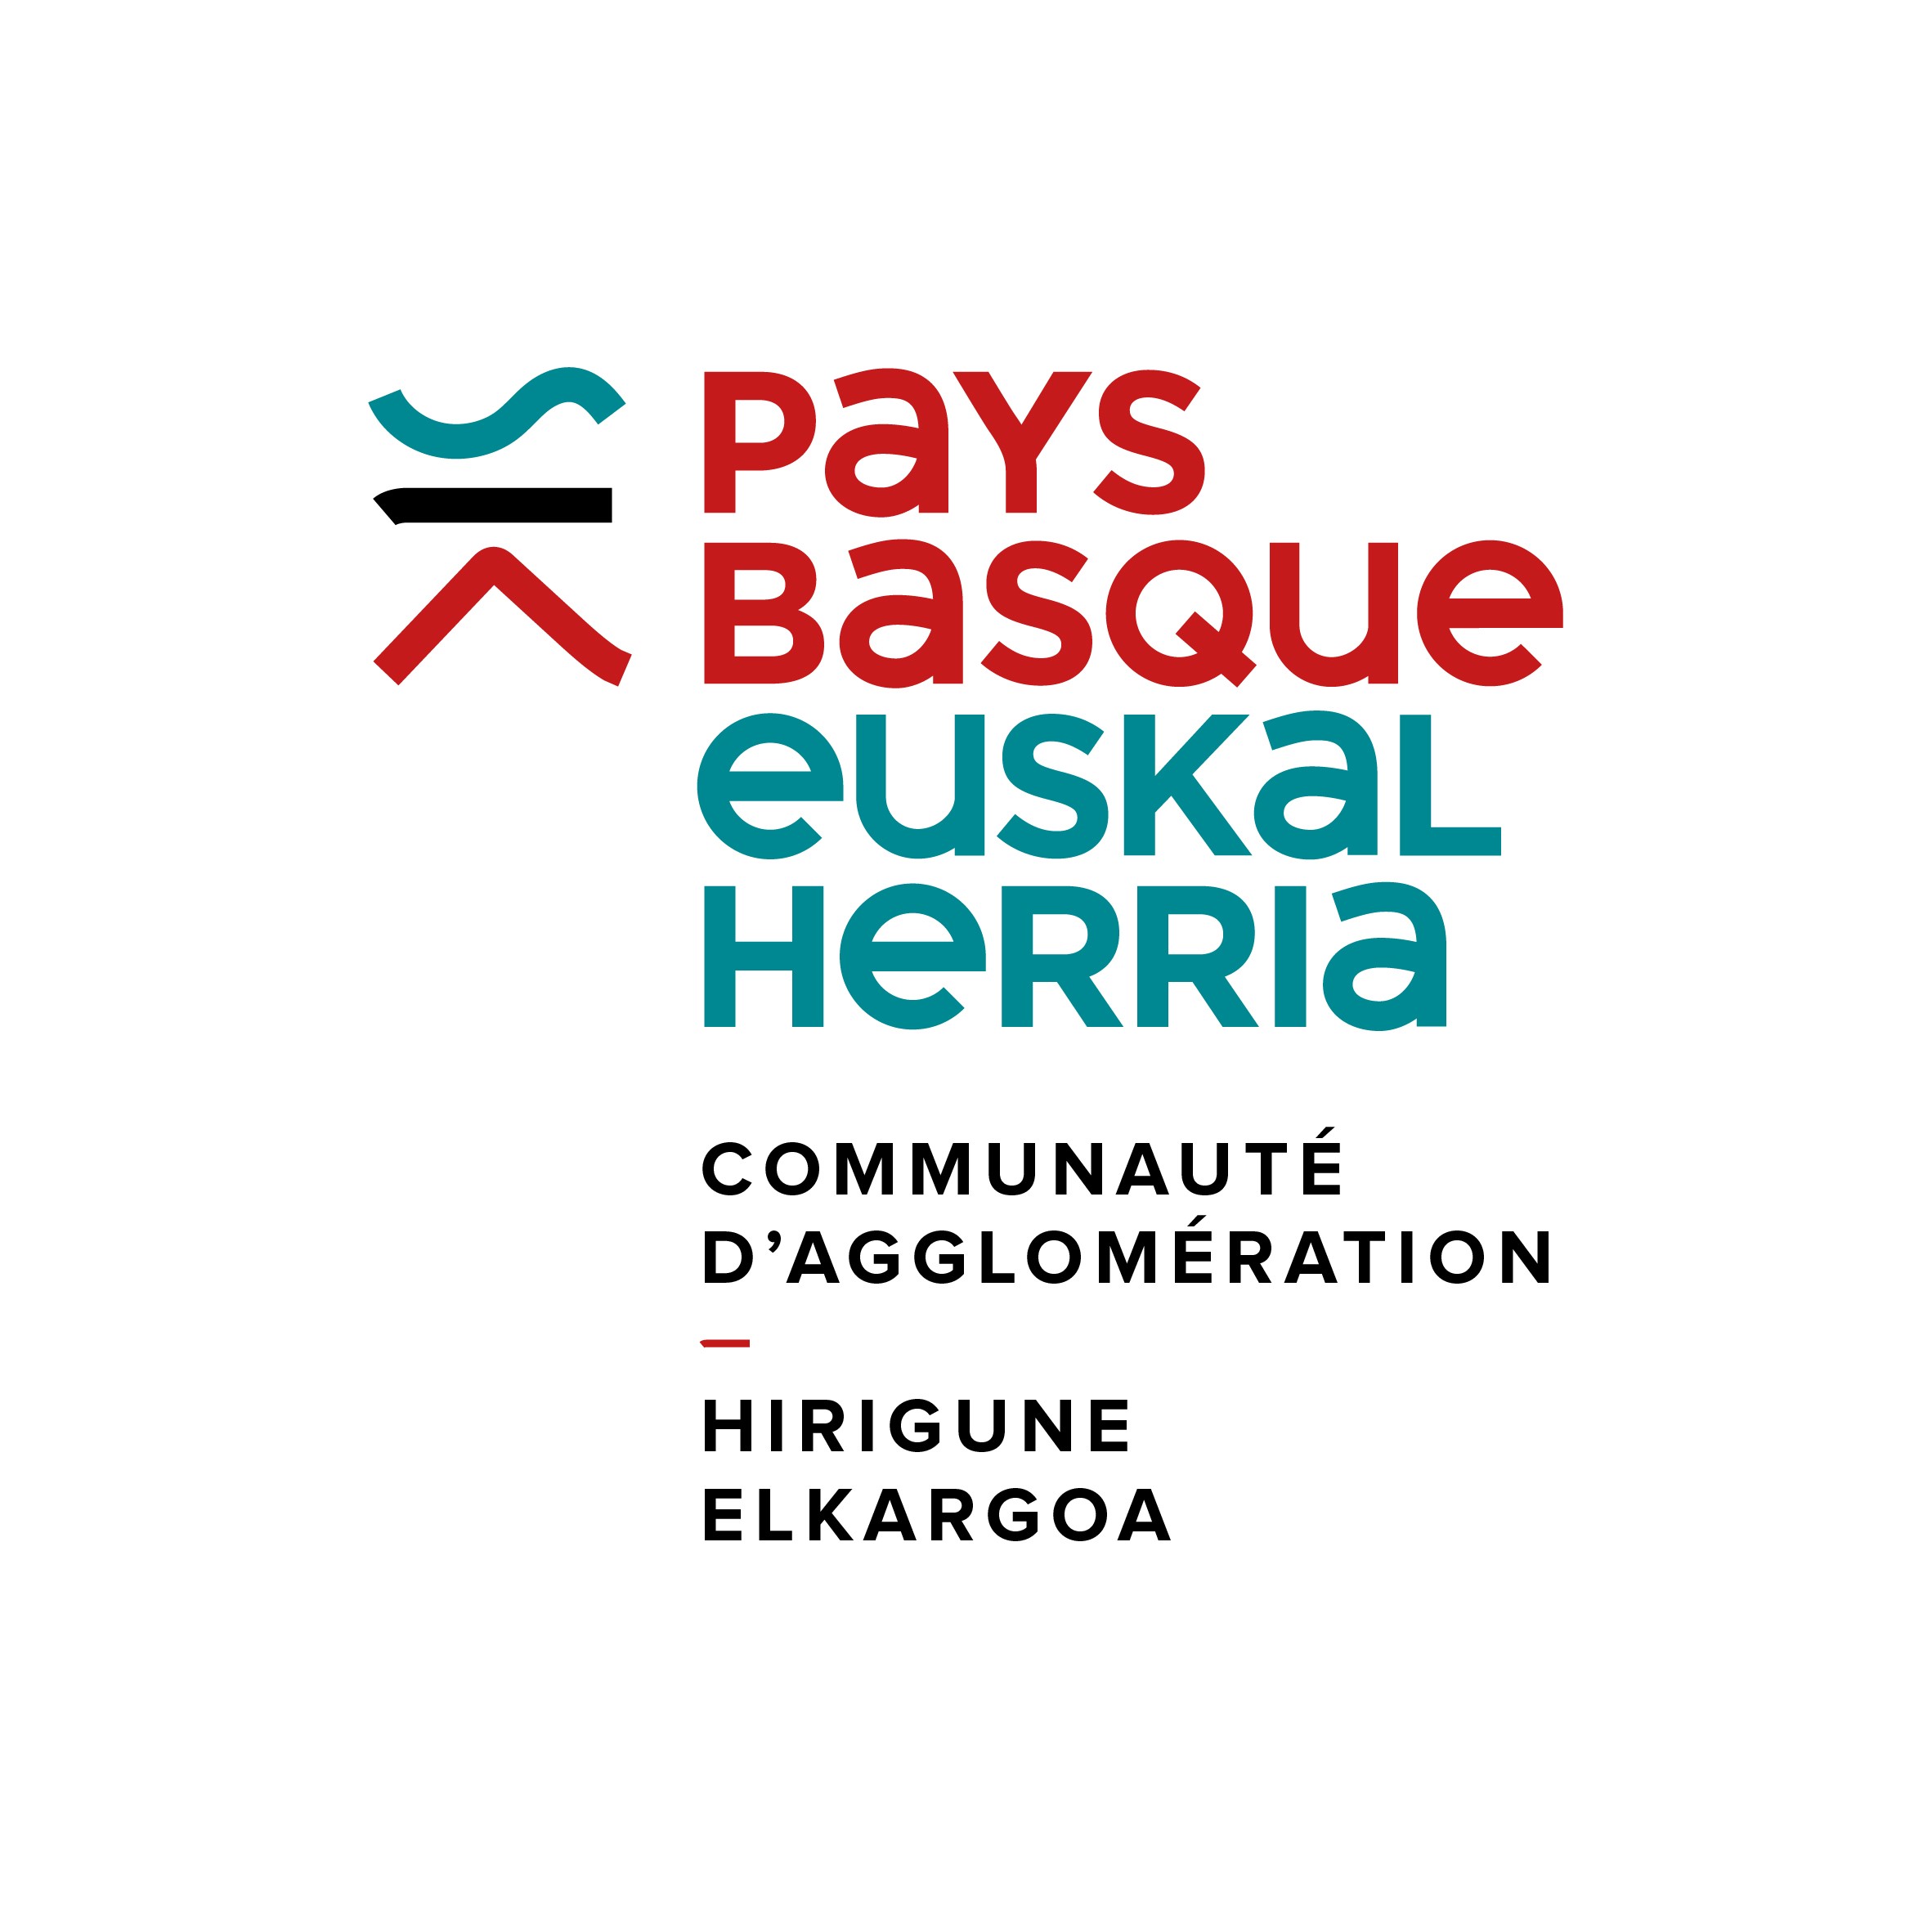 Office de Tourisme Pays Basque - En Pays Basque / Euskal herrian